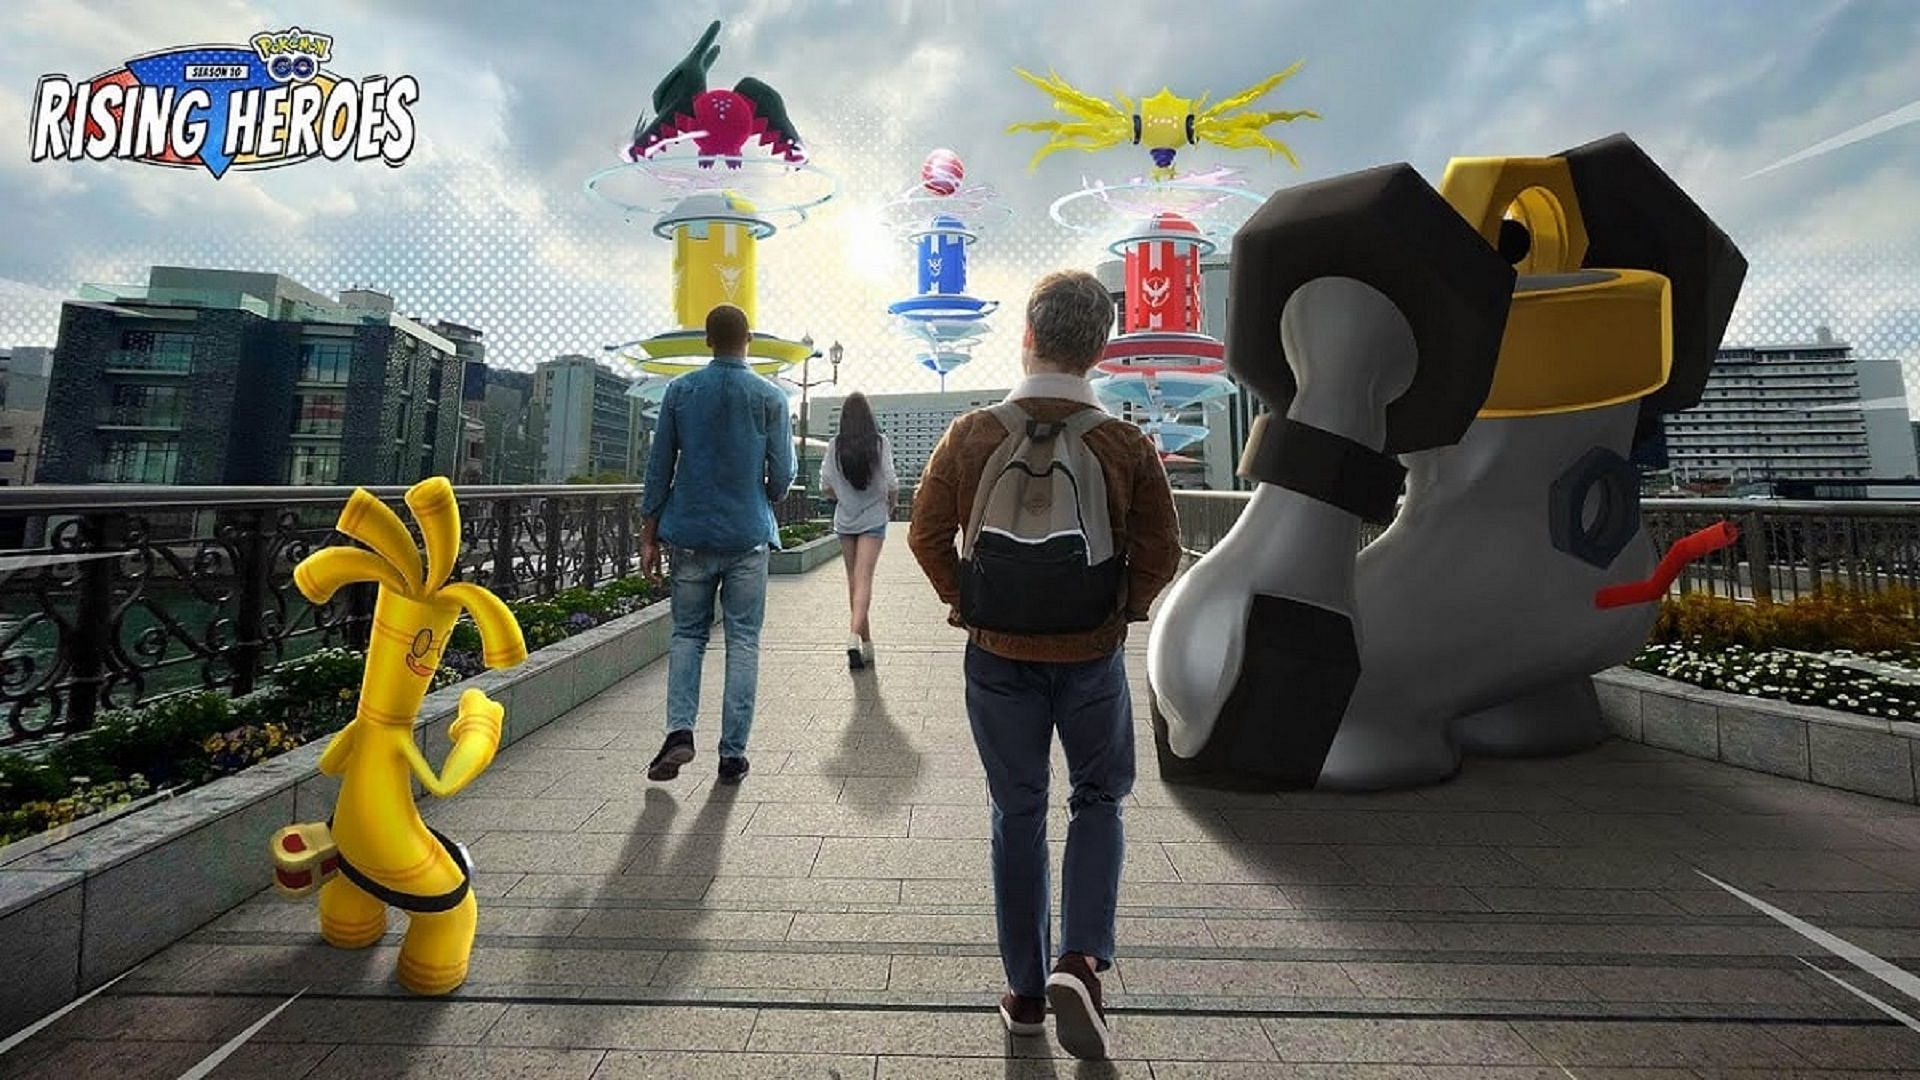 Gholdengo has already been seen in plenty of Pokemon GO advertising for the Rising Heroes season (Image via Niantic)